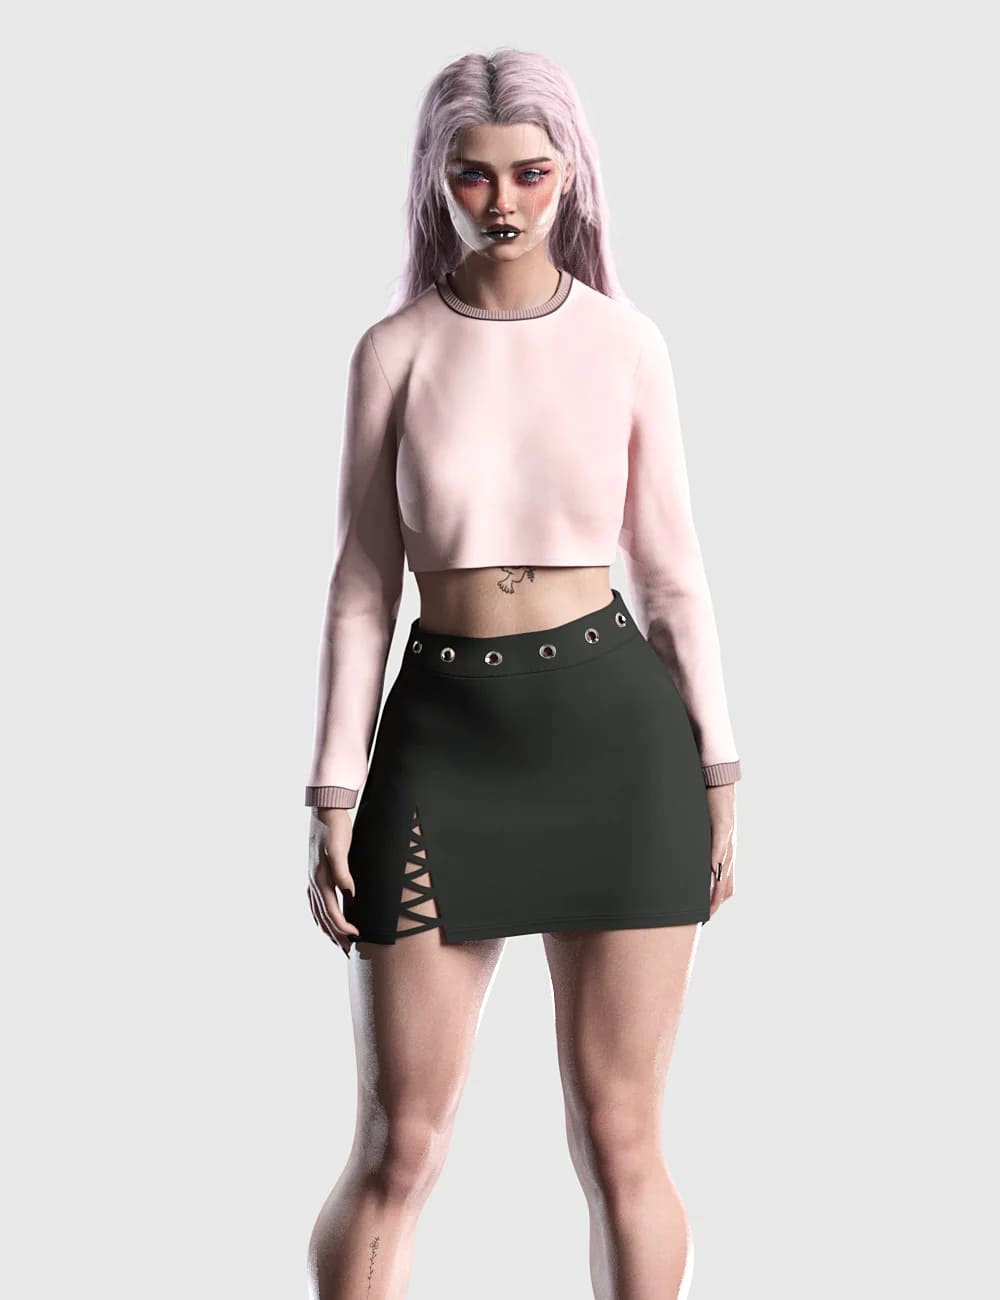 dForce Casual Crop Outfit for Genesis 8 Females_DAZ3D下载站